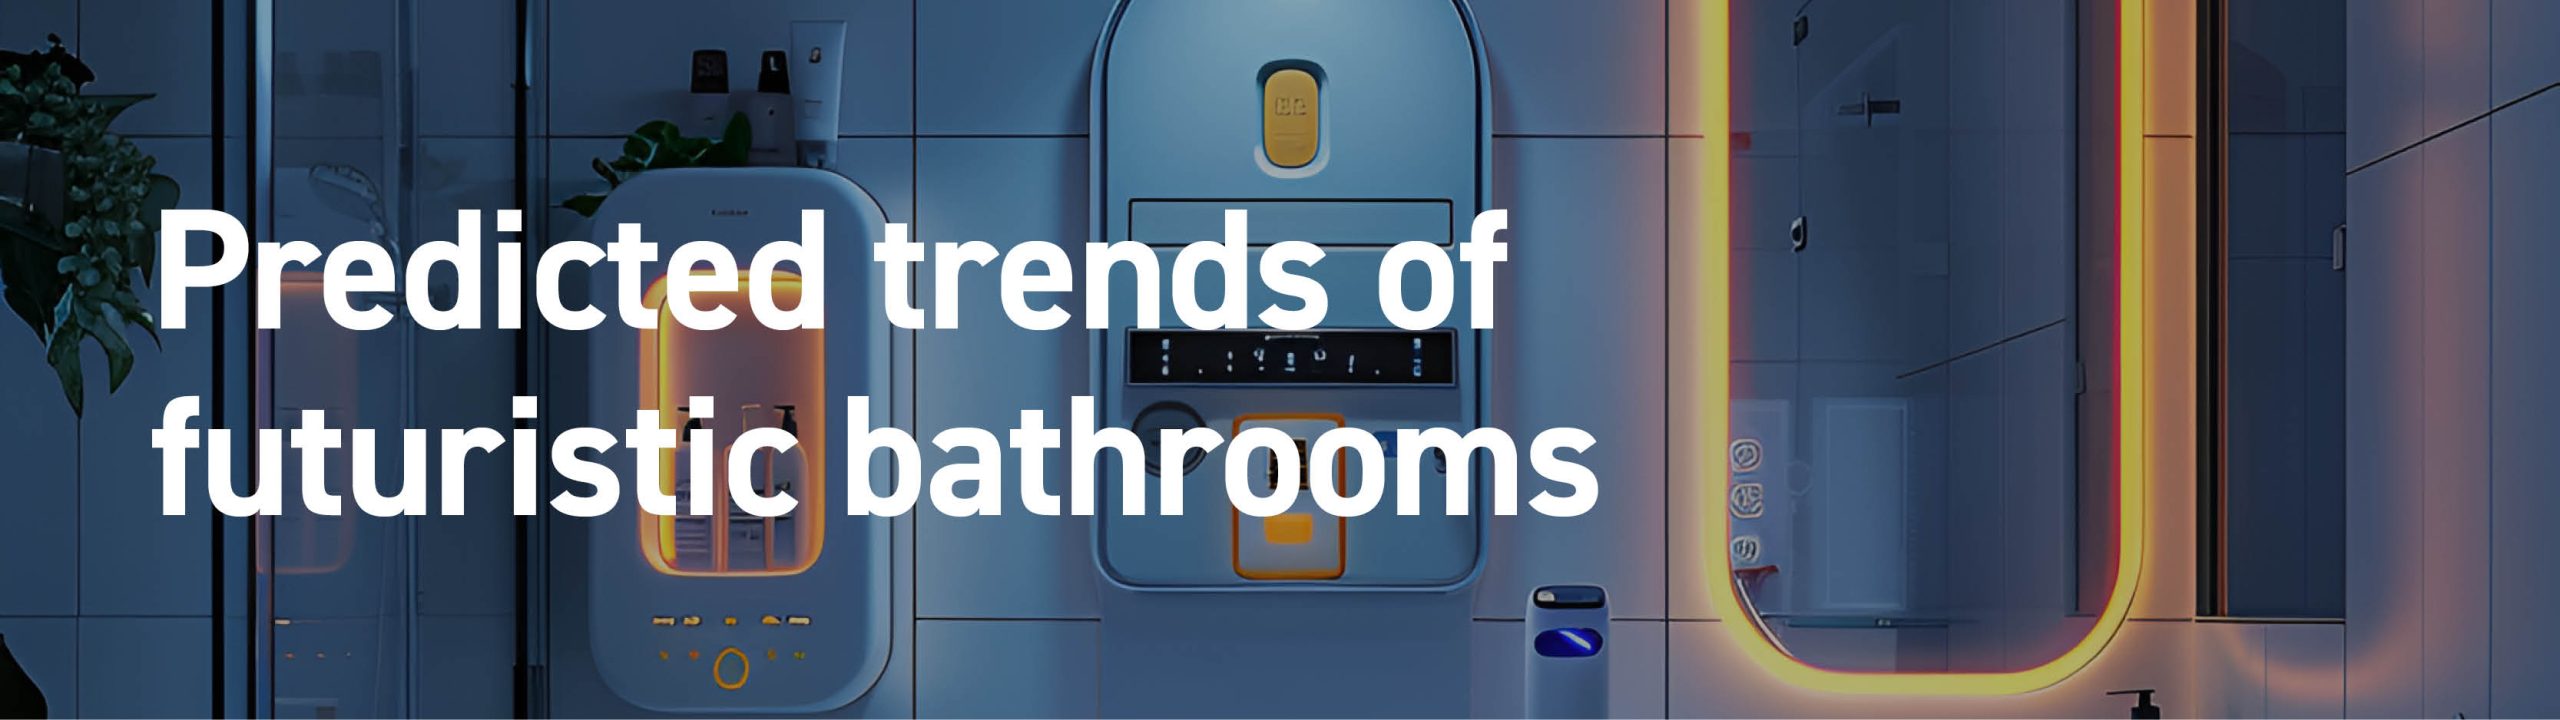 Blog title on a background of a futuristic bathroom.